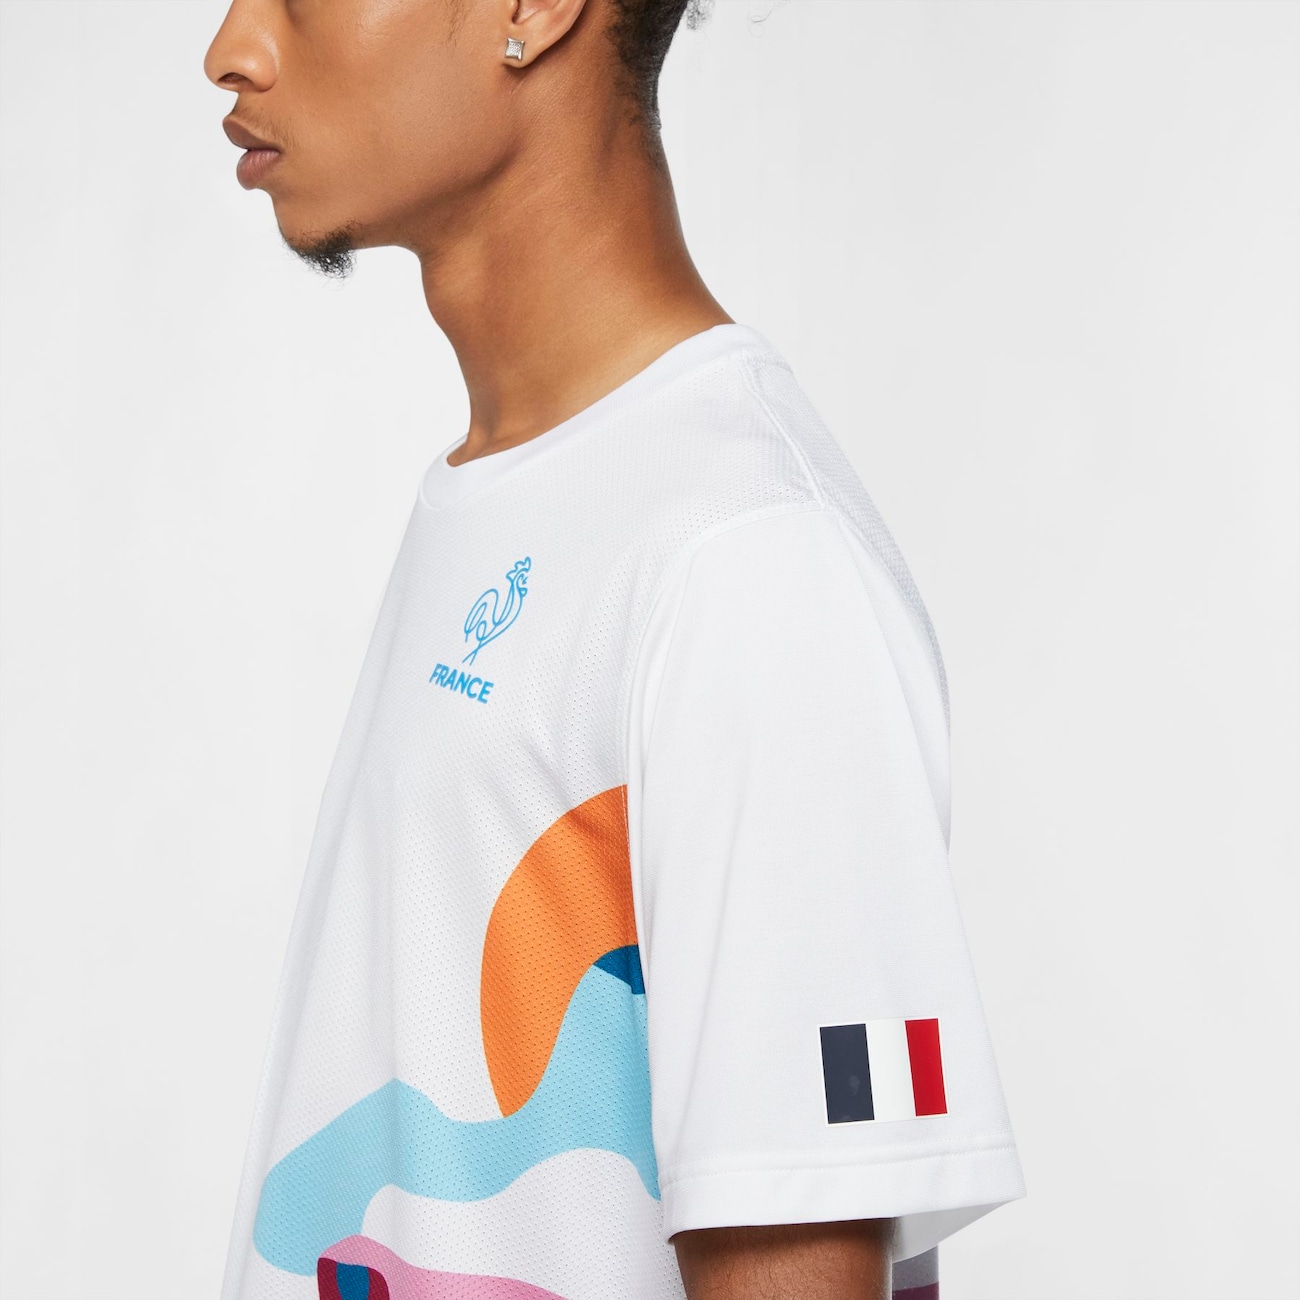 Camiseta Nike SB Time França Masculina - Foto 4